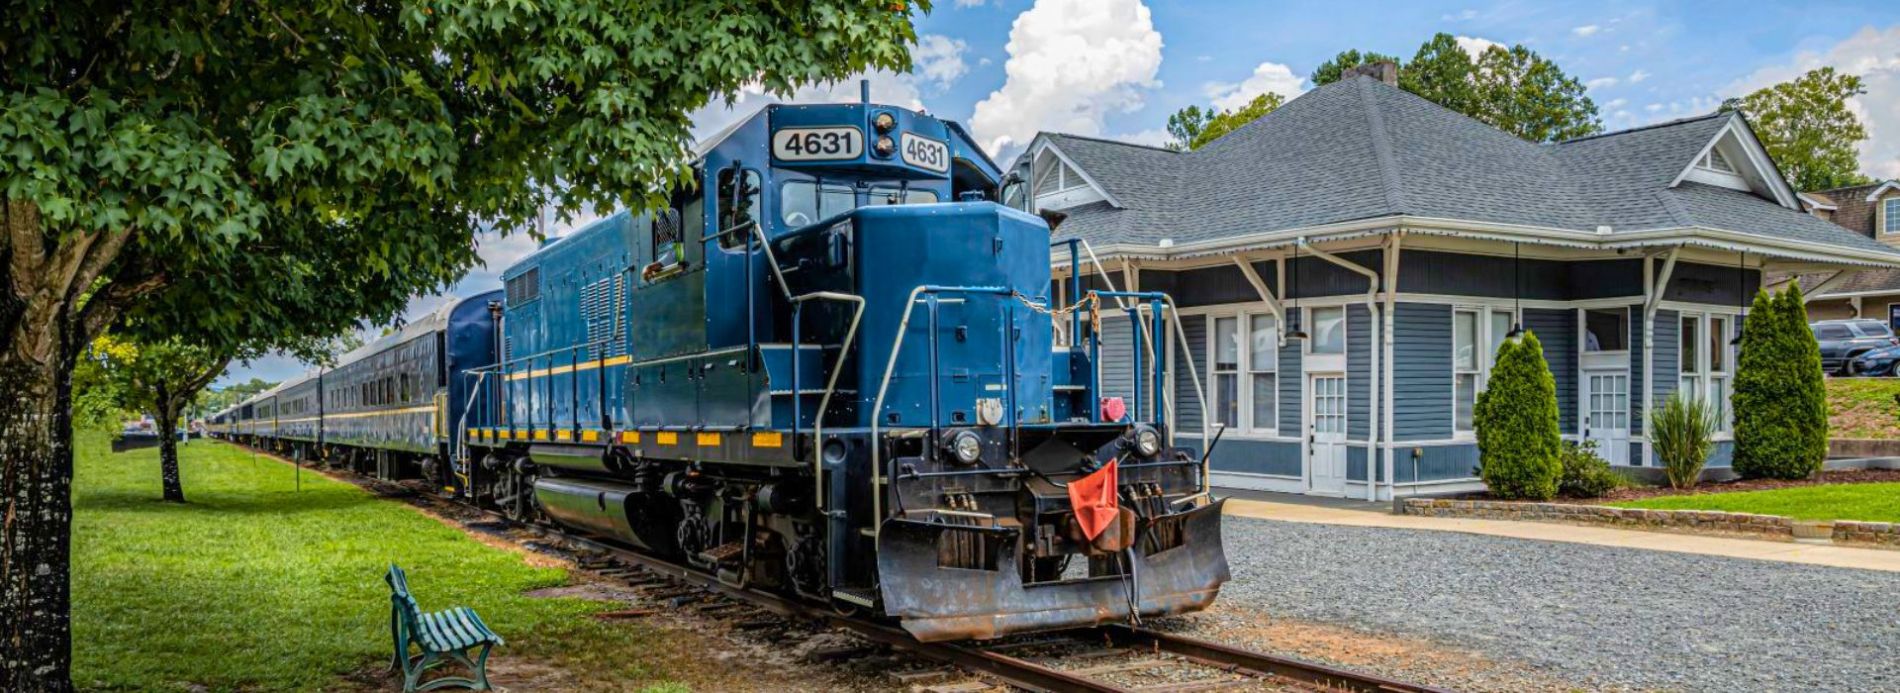 Blue Ridge Scenic Railway train